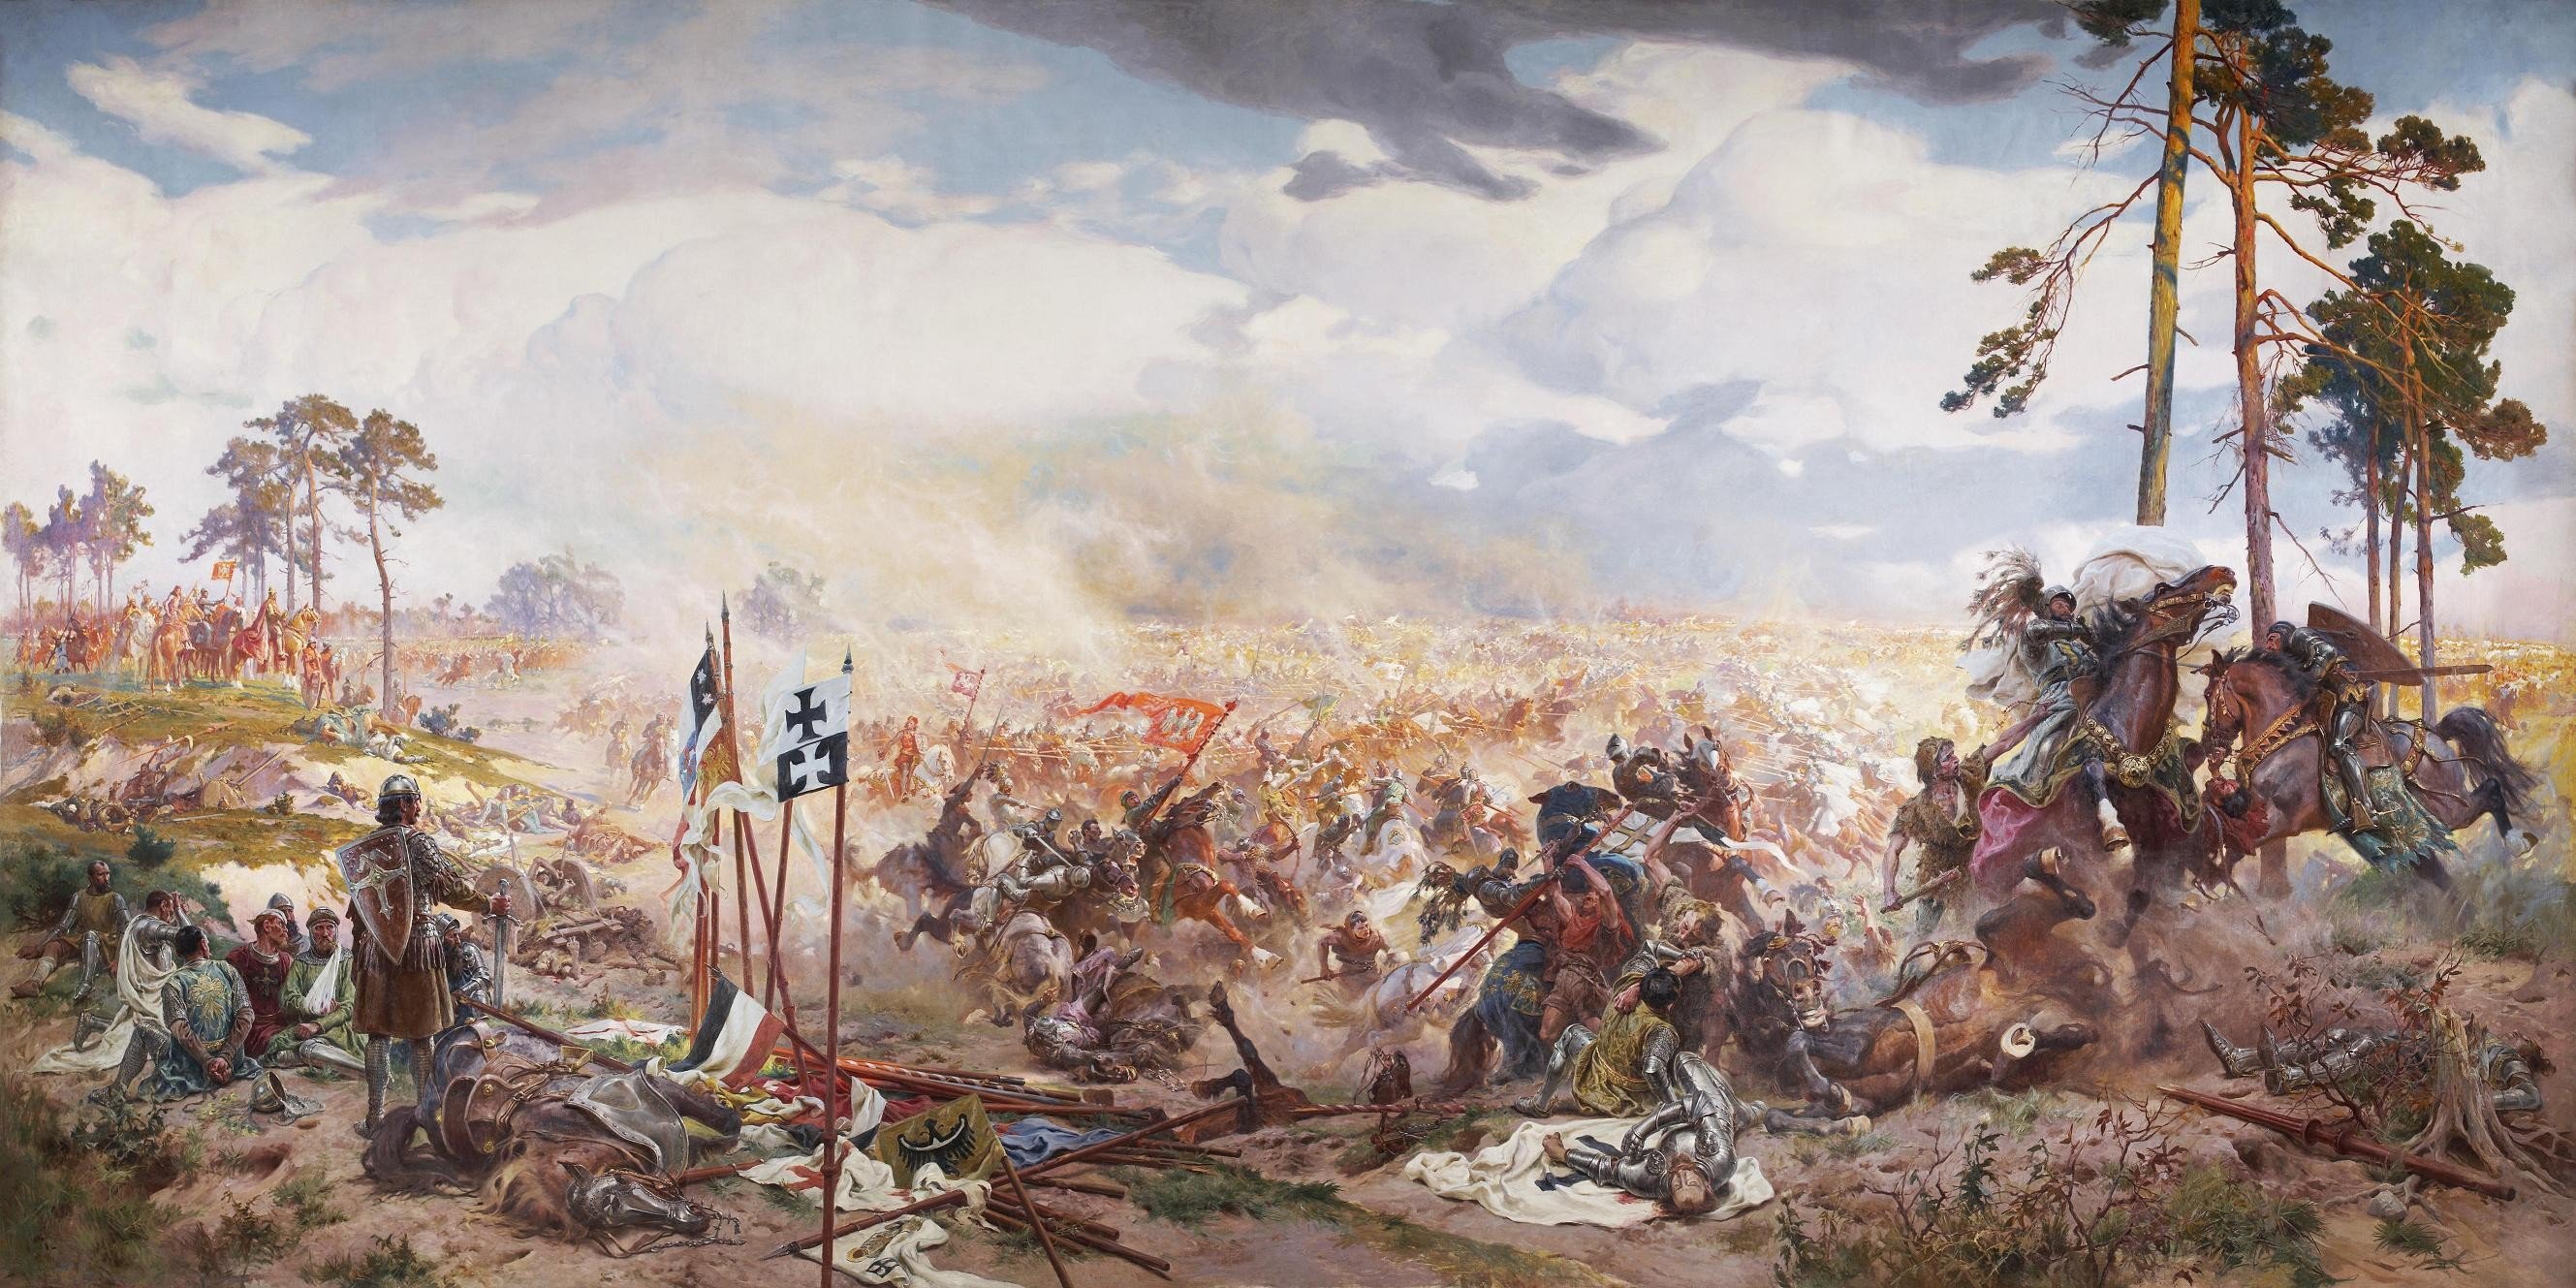 historic, Battle of Grunwald, Žalgirio mūšis, Lithuania, Teutonic, Battlefields, Painting, Poland Wallpaper